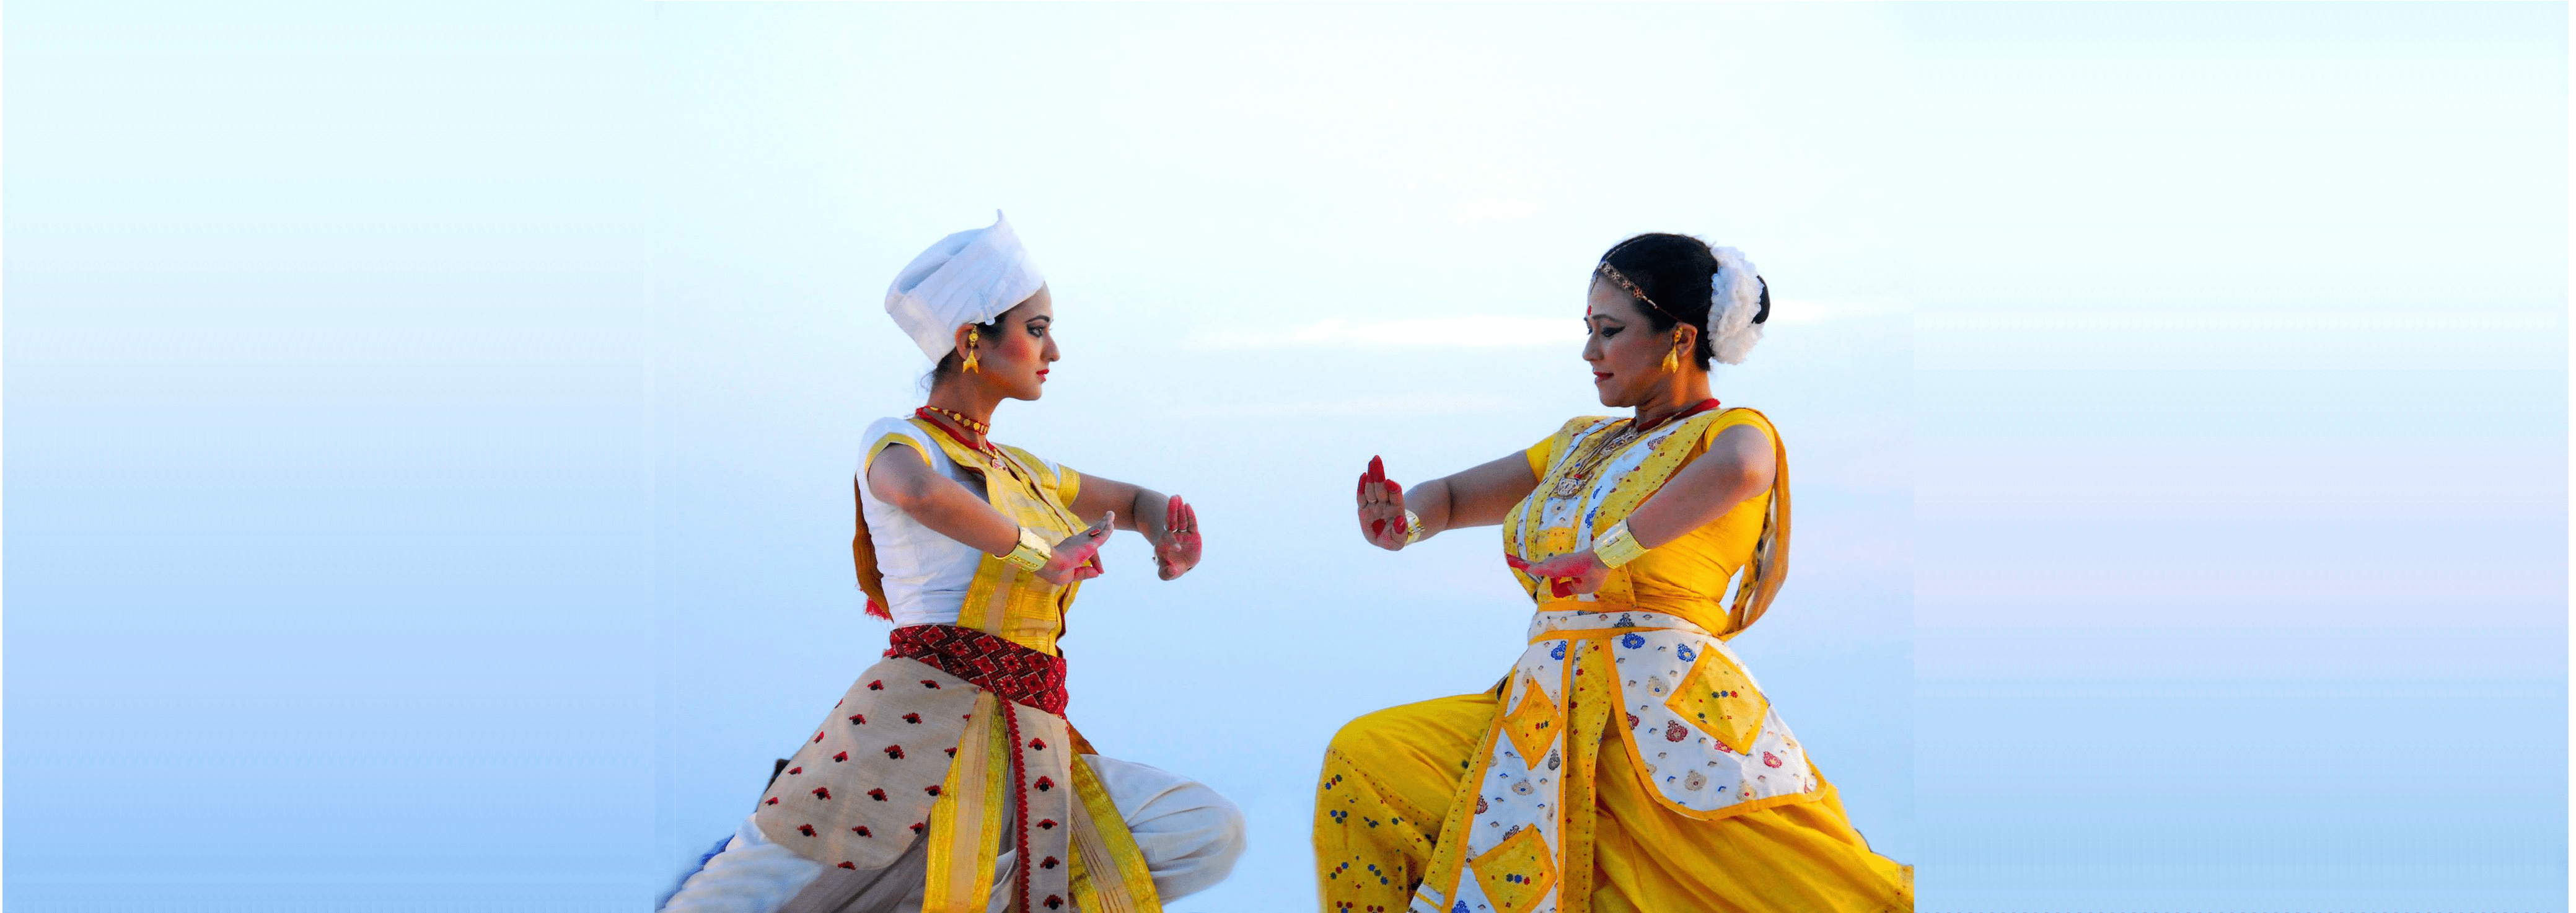 Madhusmita and Prerona performing Sattriya at Erasing Borders Dance Festival in New York